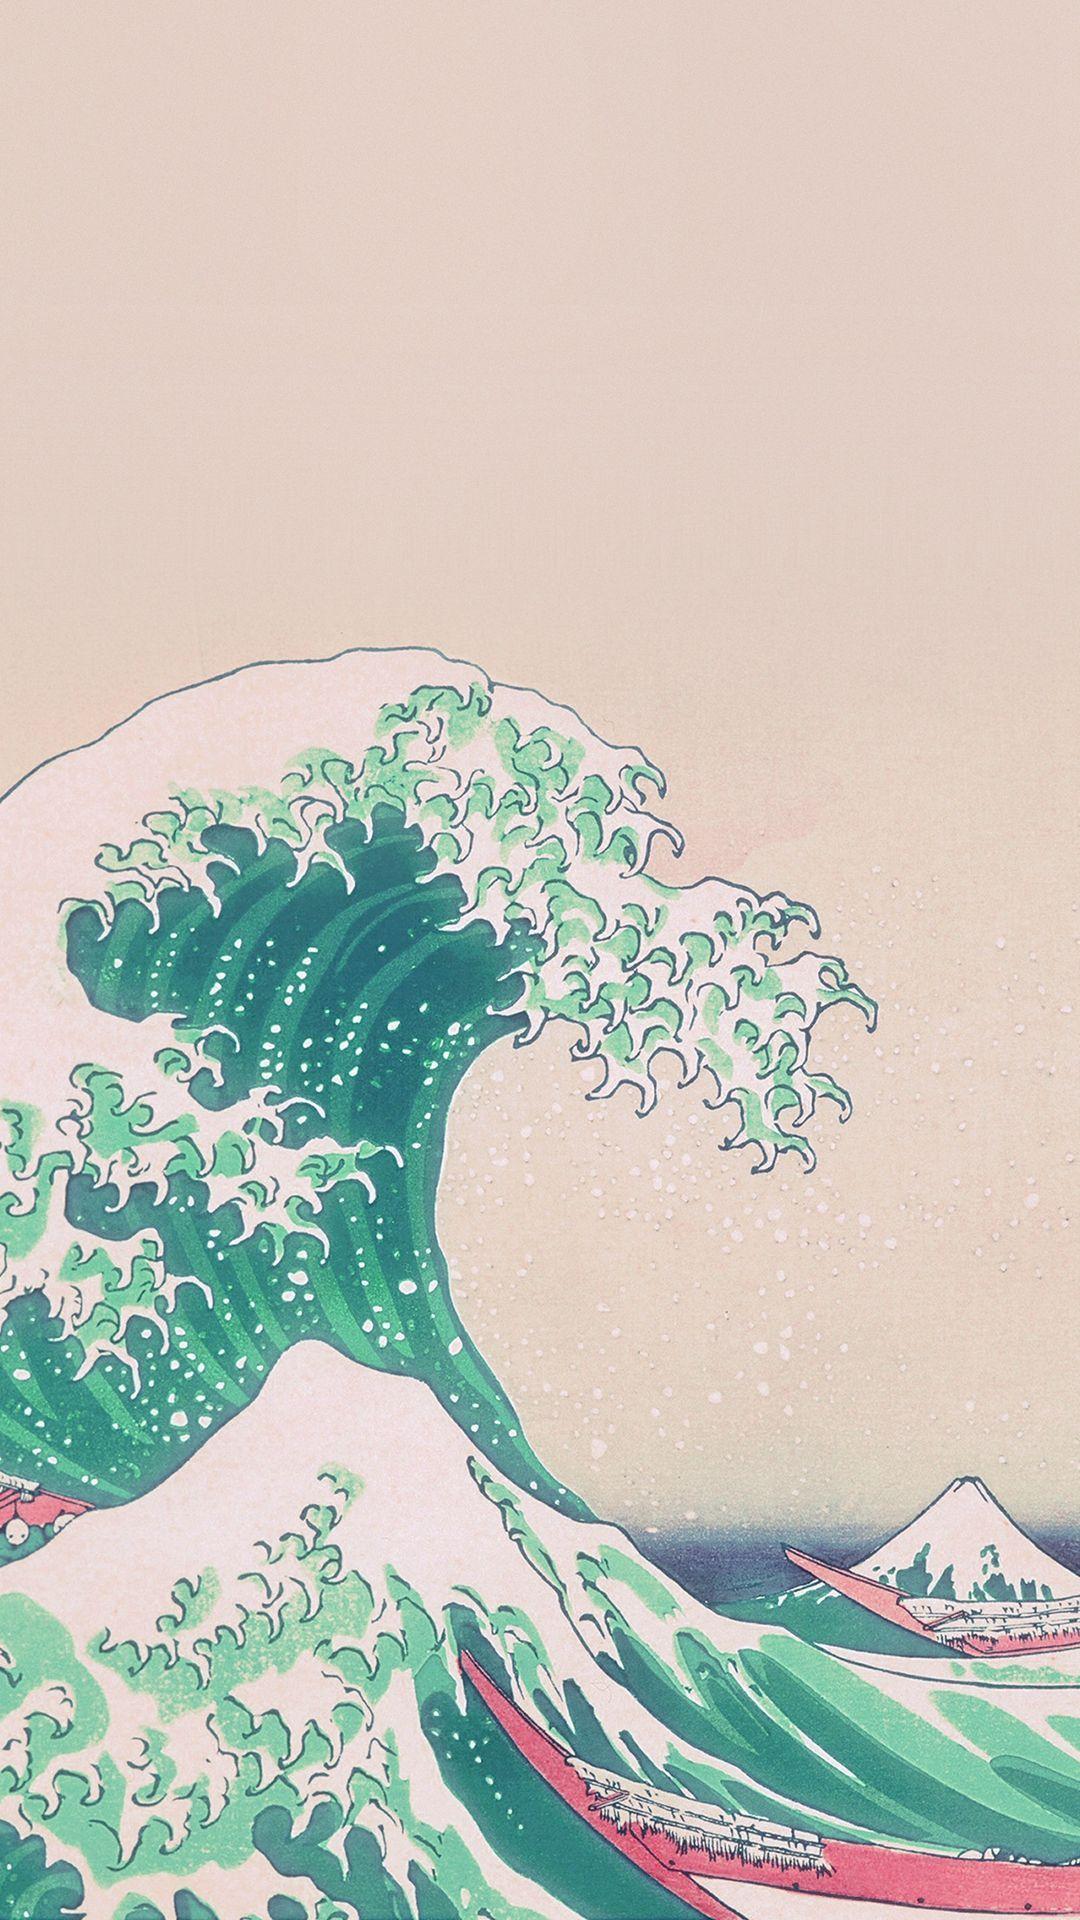 Wave Art Japanese Green Illust Classic IPhone 6 Wallpaper Download. IPhone Wallpaper, IPad Wallpaper One Stop Downl. Waves Wallpaper, Cute Wallpaper, Wave Art